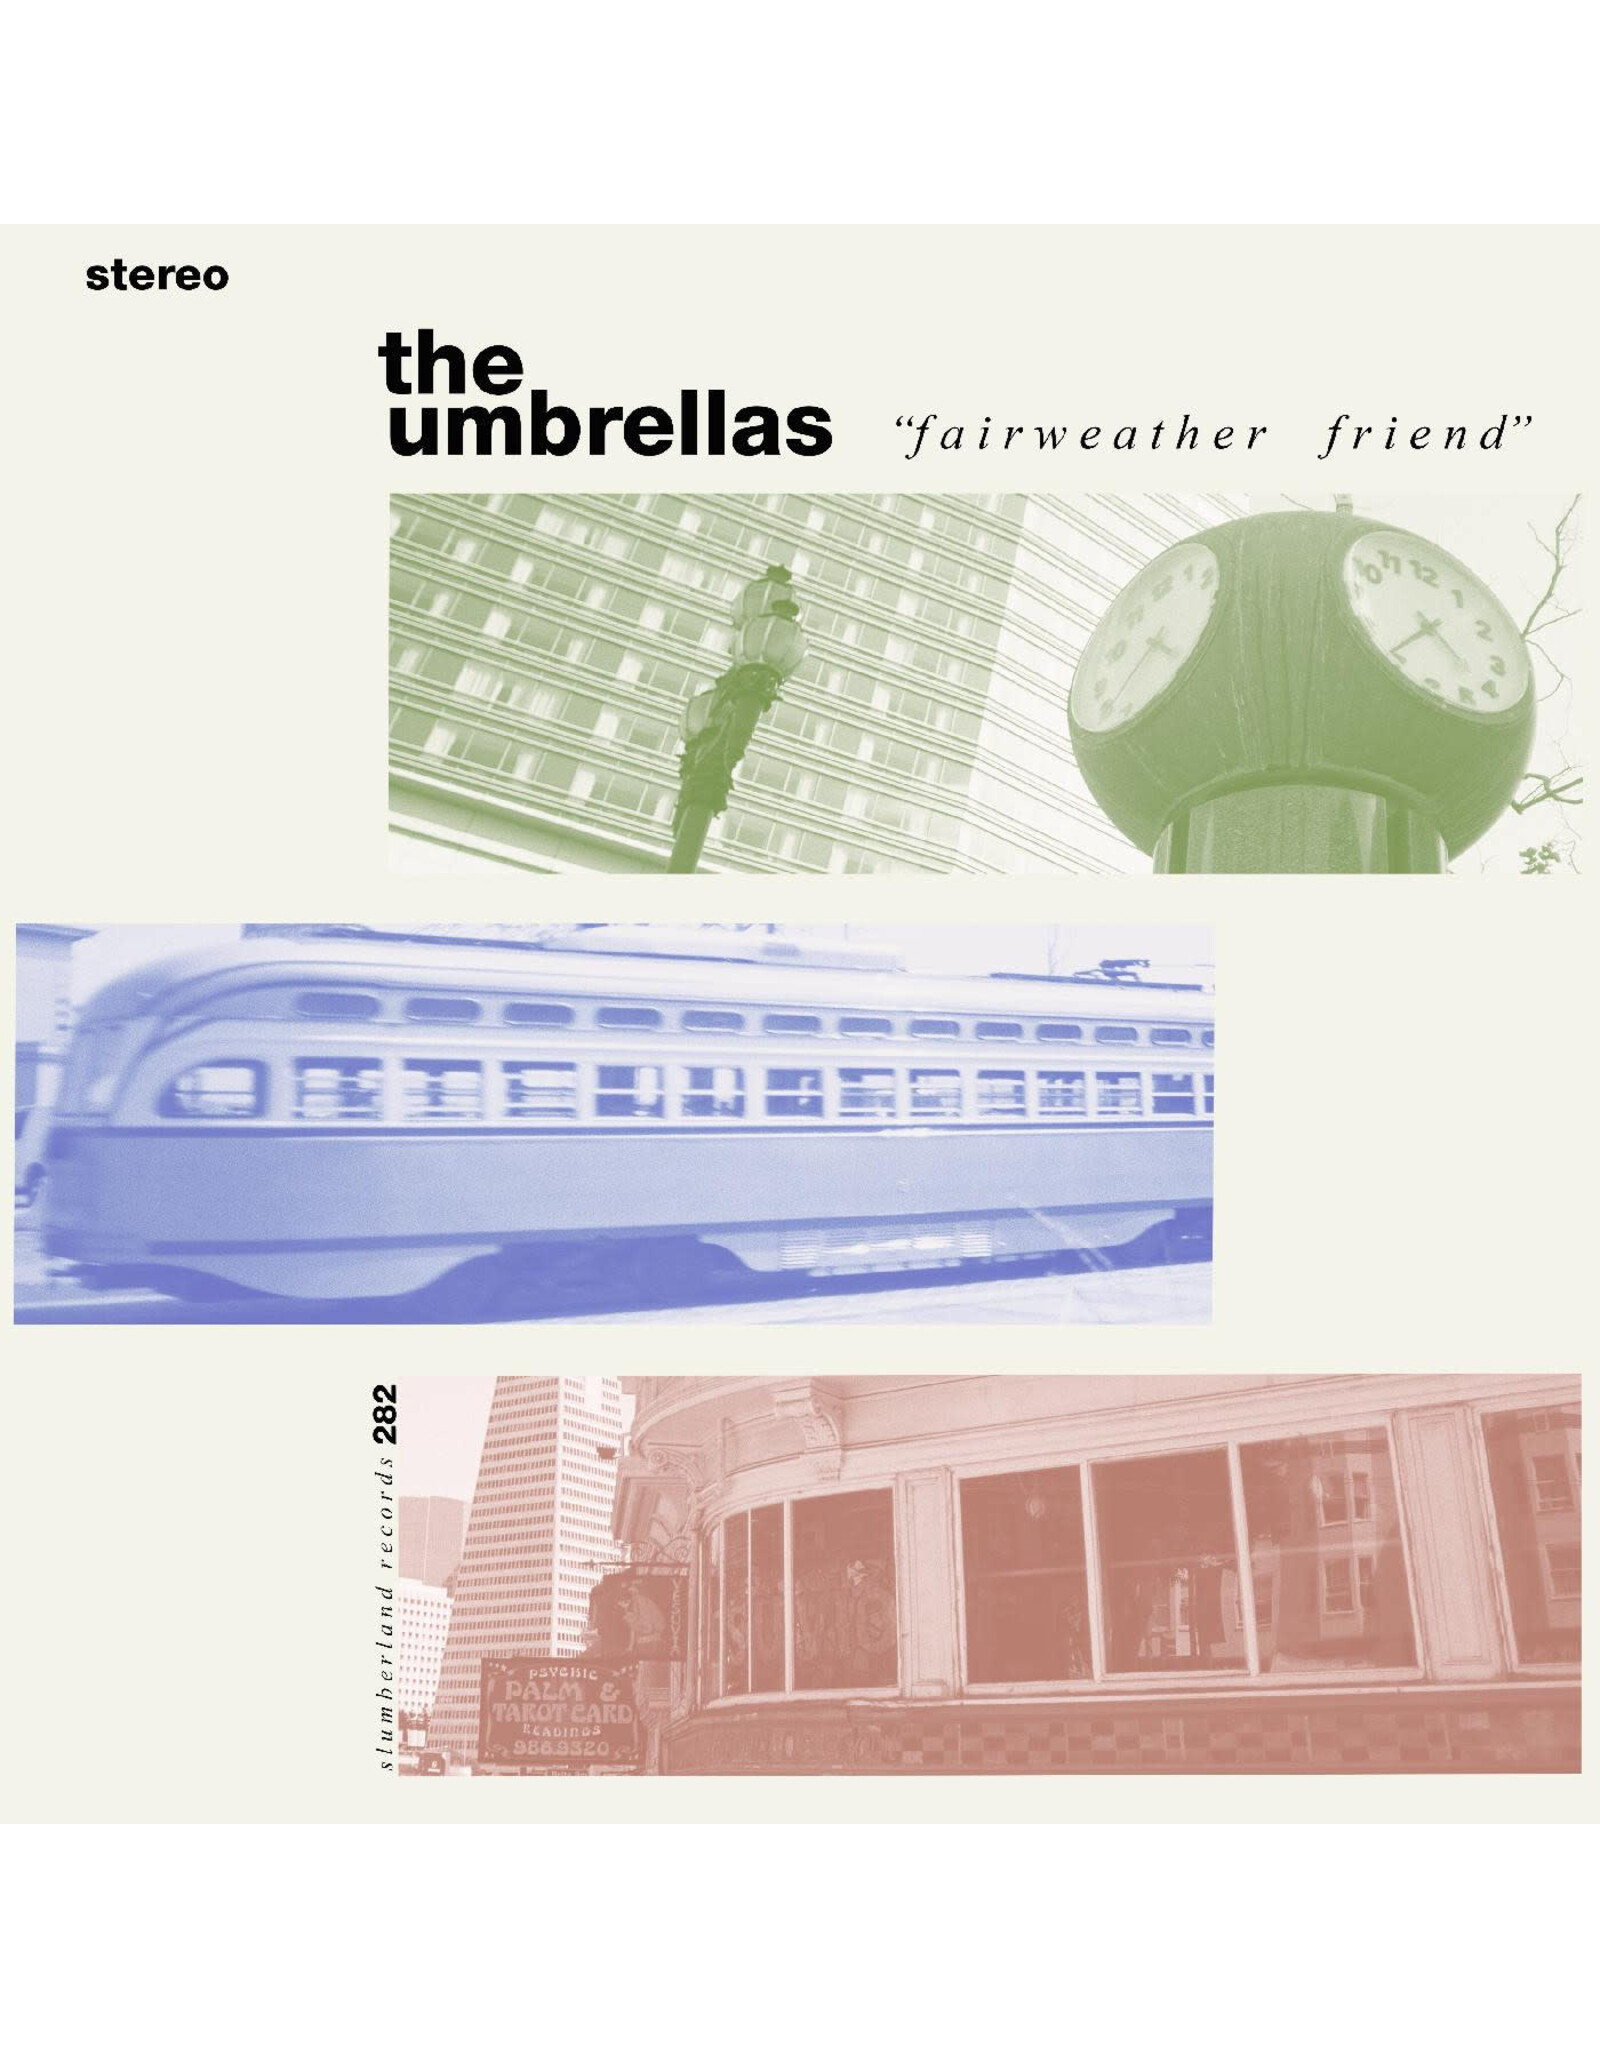 Umbrellas / Fairweather Friend (red vinyl)